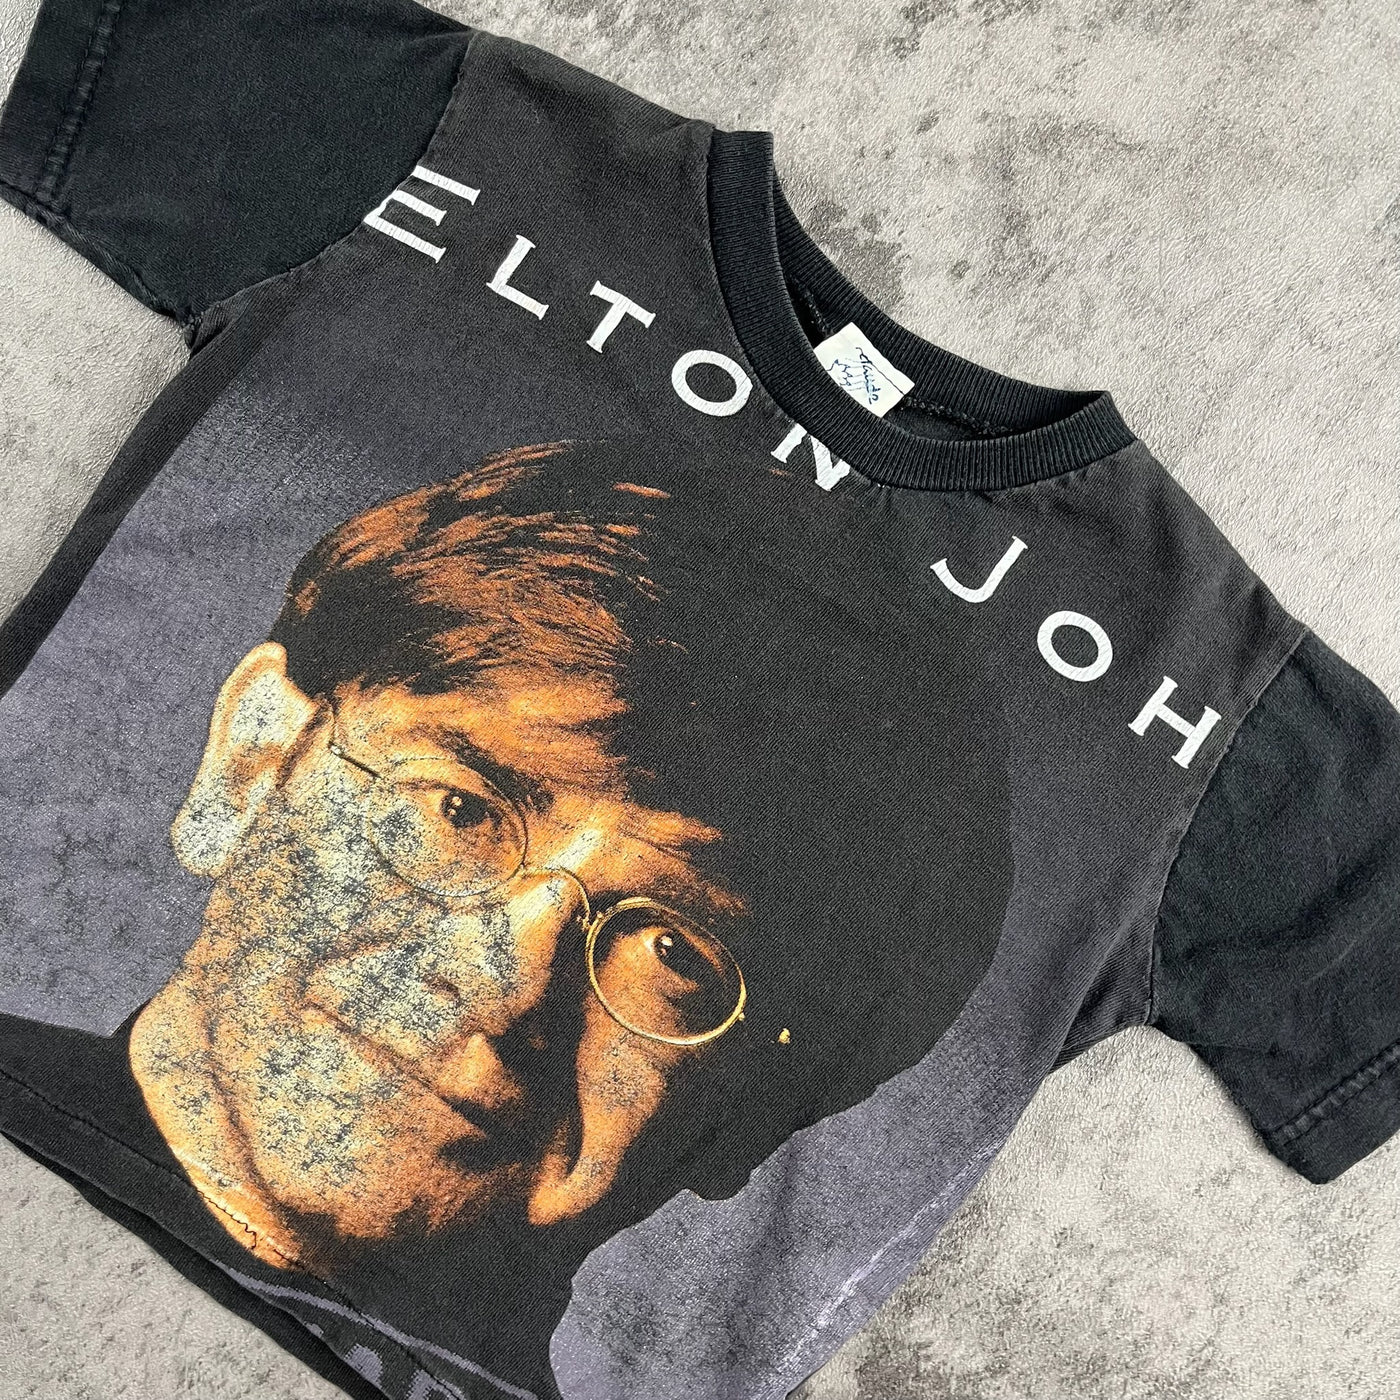 Vintage Elton John Concert T-Shirt 2T